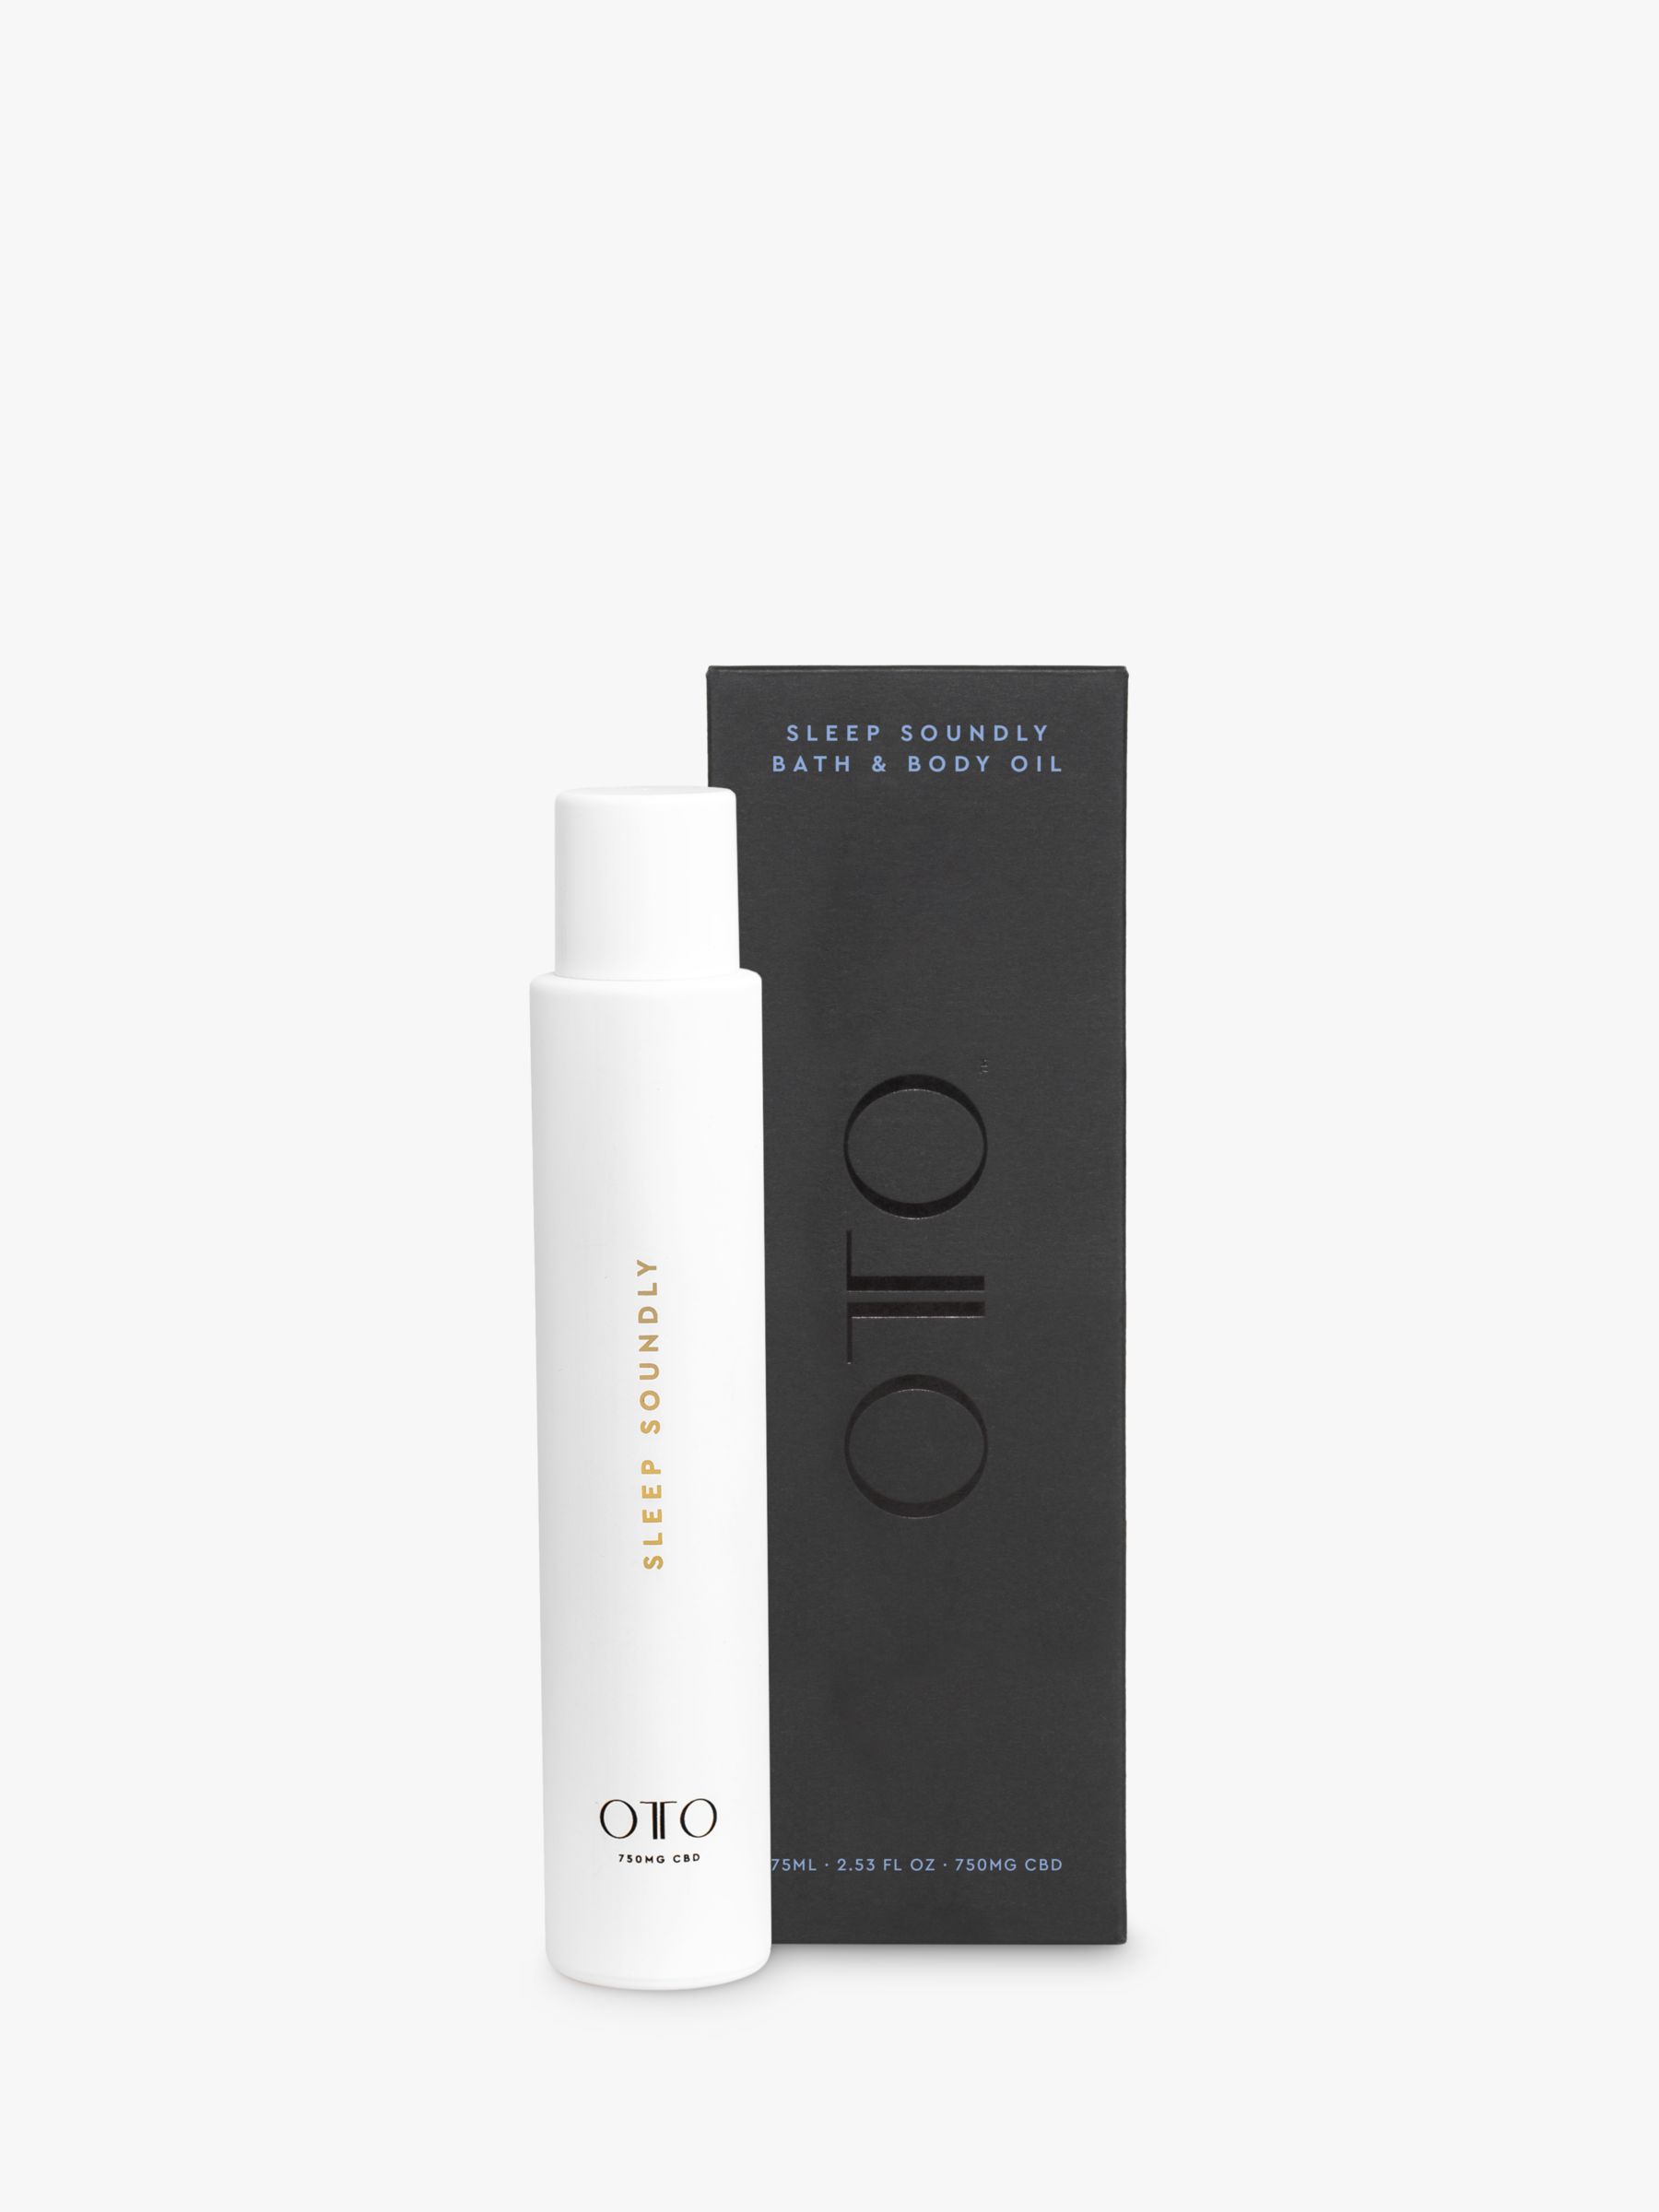 OTO Sleep Soundly Bath and Body Oil, 75ml